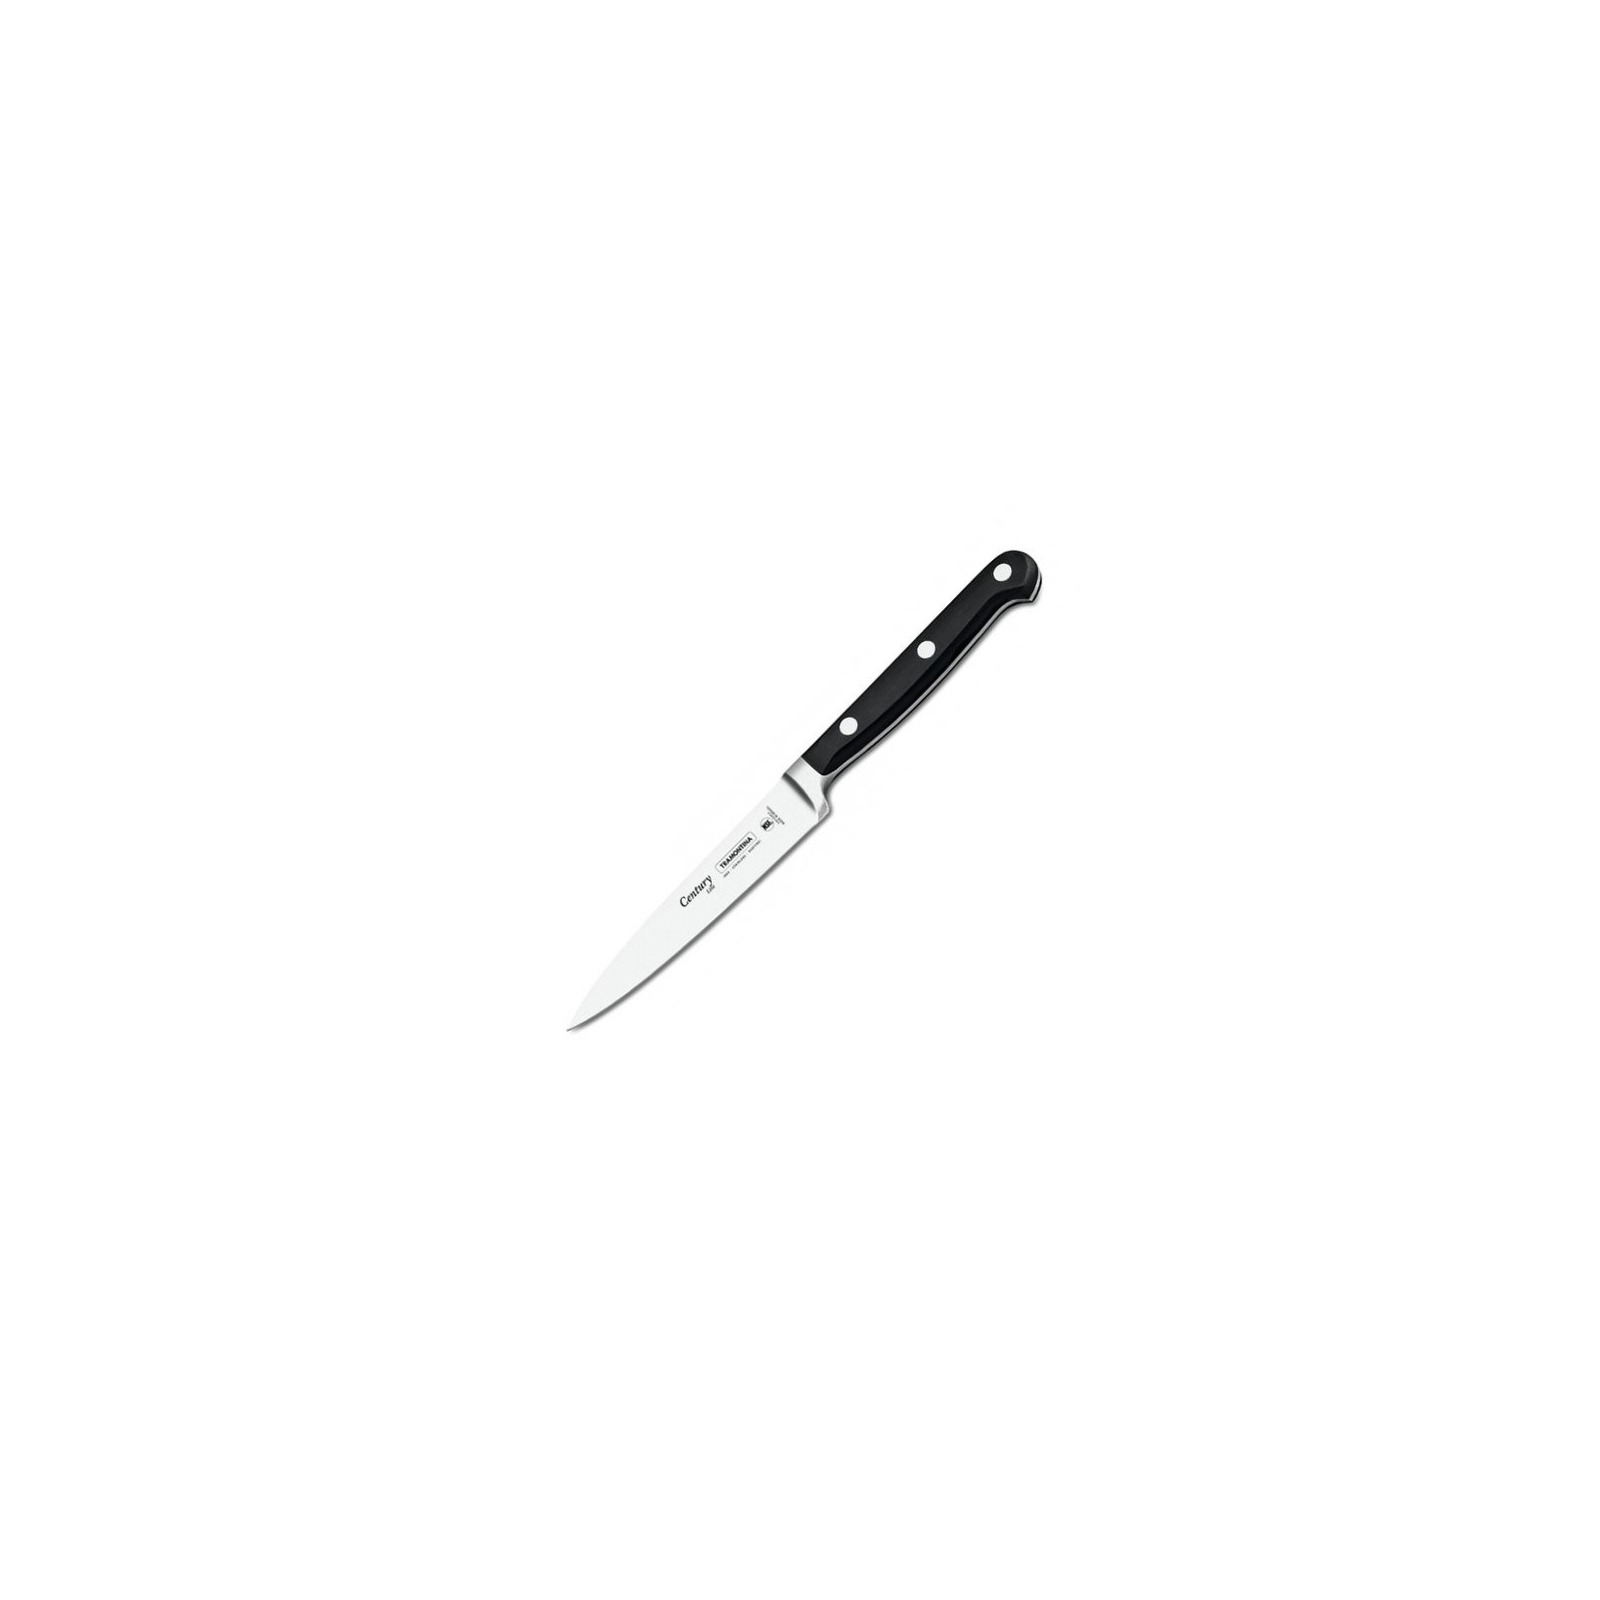 Кухонный нож Tramontina Century для мяса 254 мм Black (24010/110)